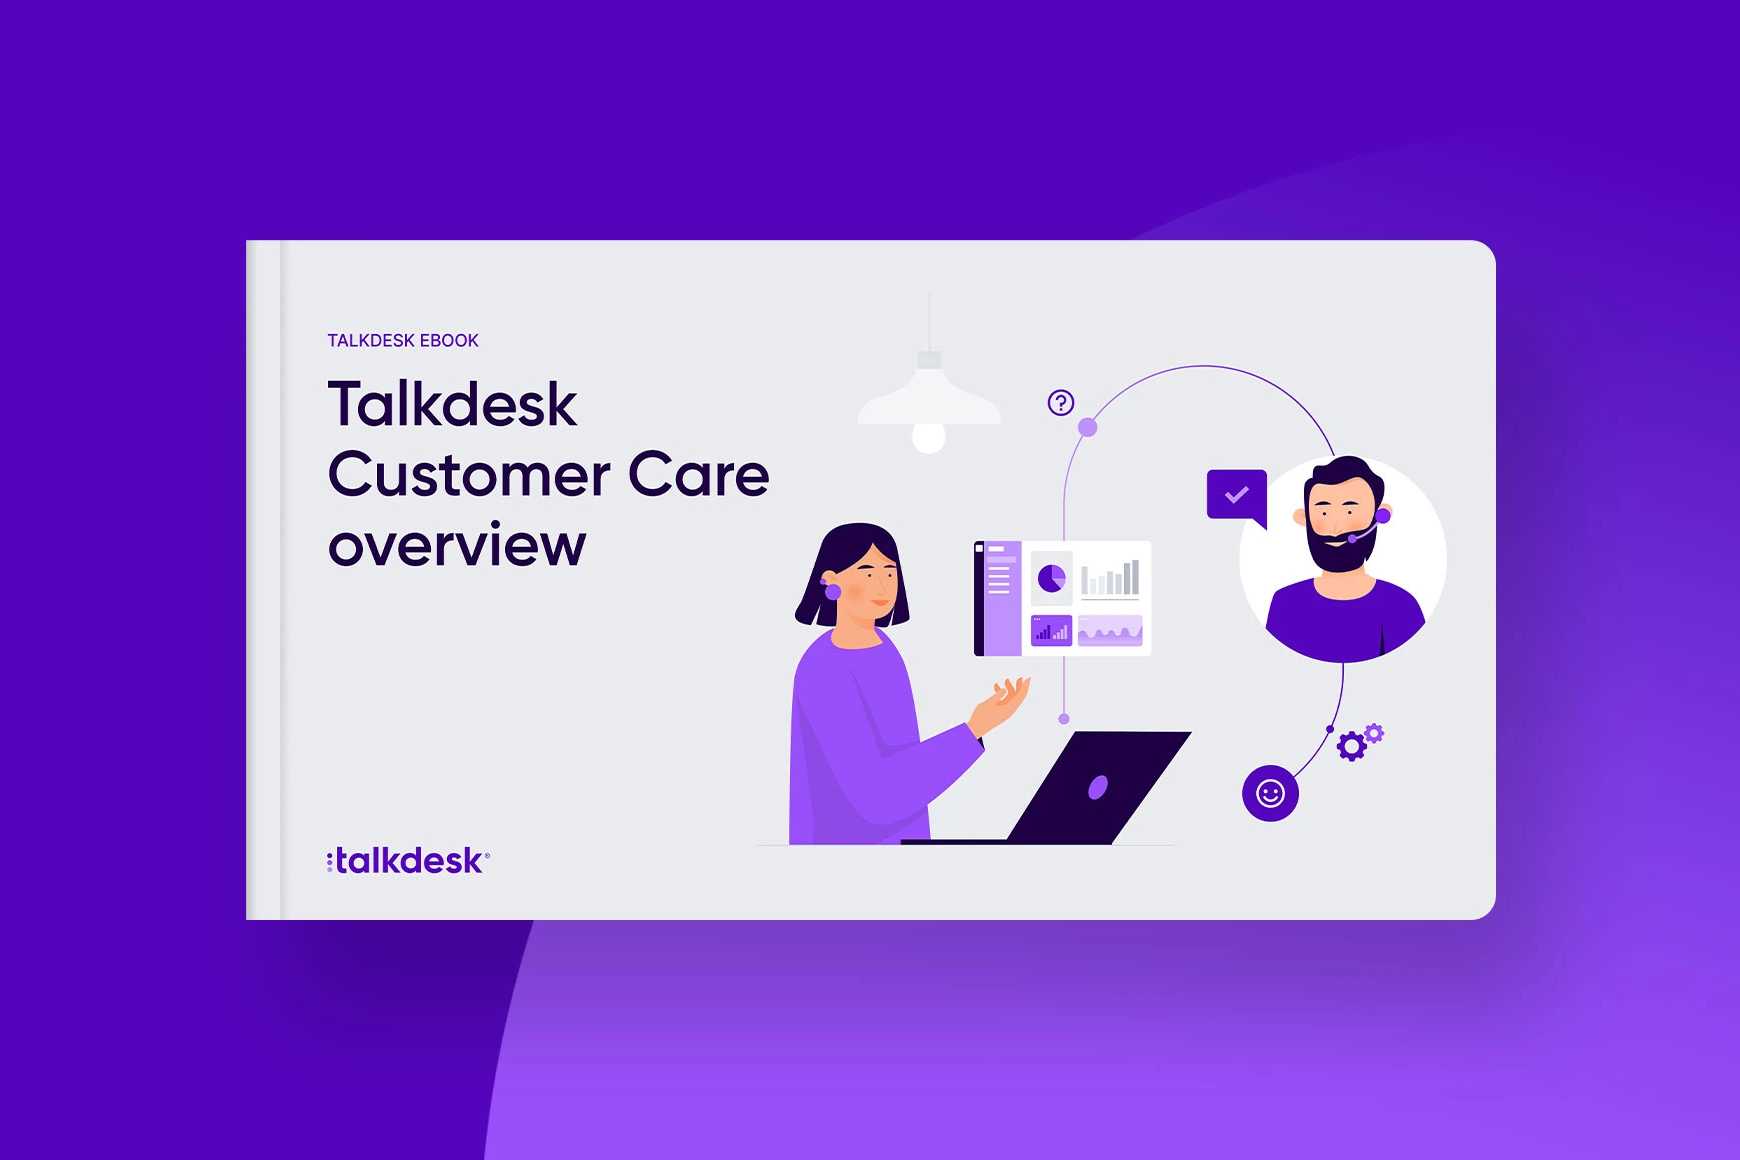 Talkdesk Customer Care overview